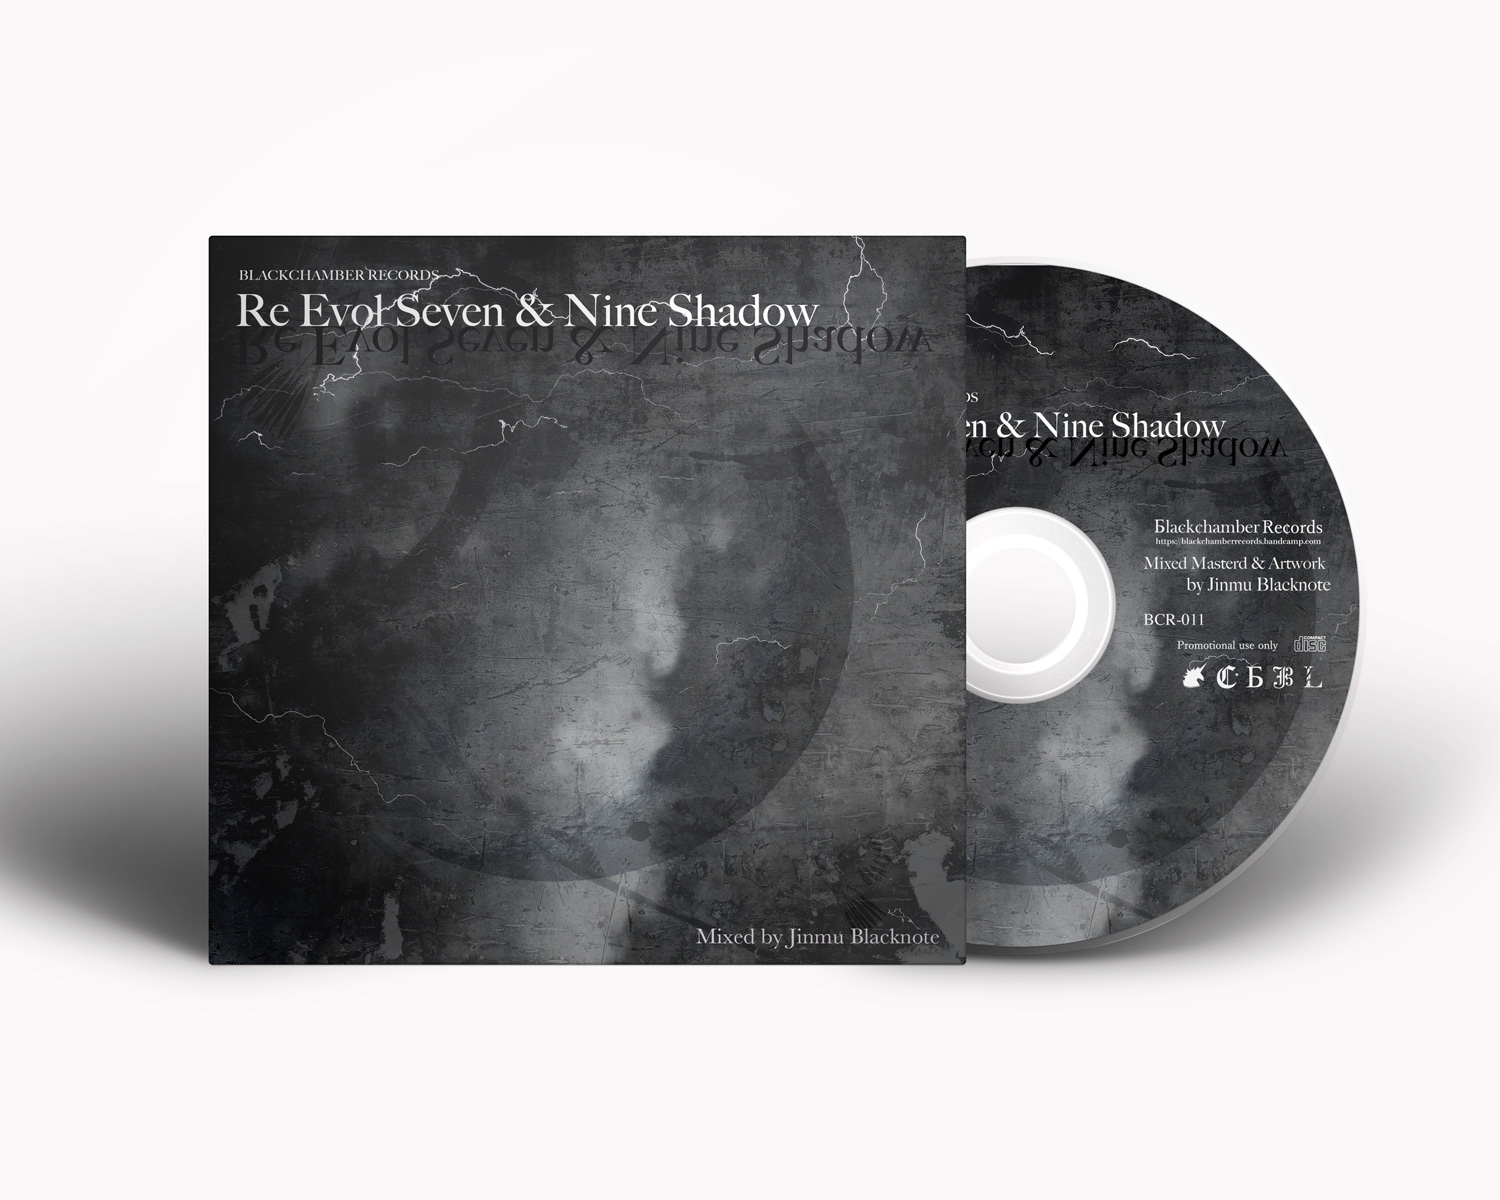 Re Evol Seven & Nine Shadow - Jinmu Blacknote